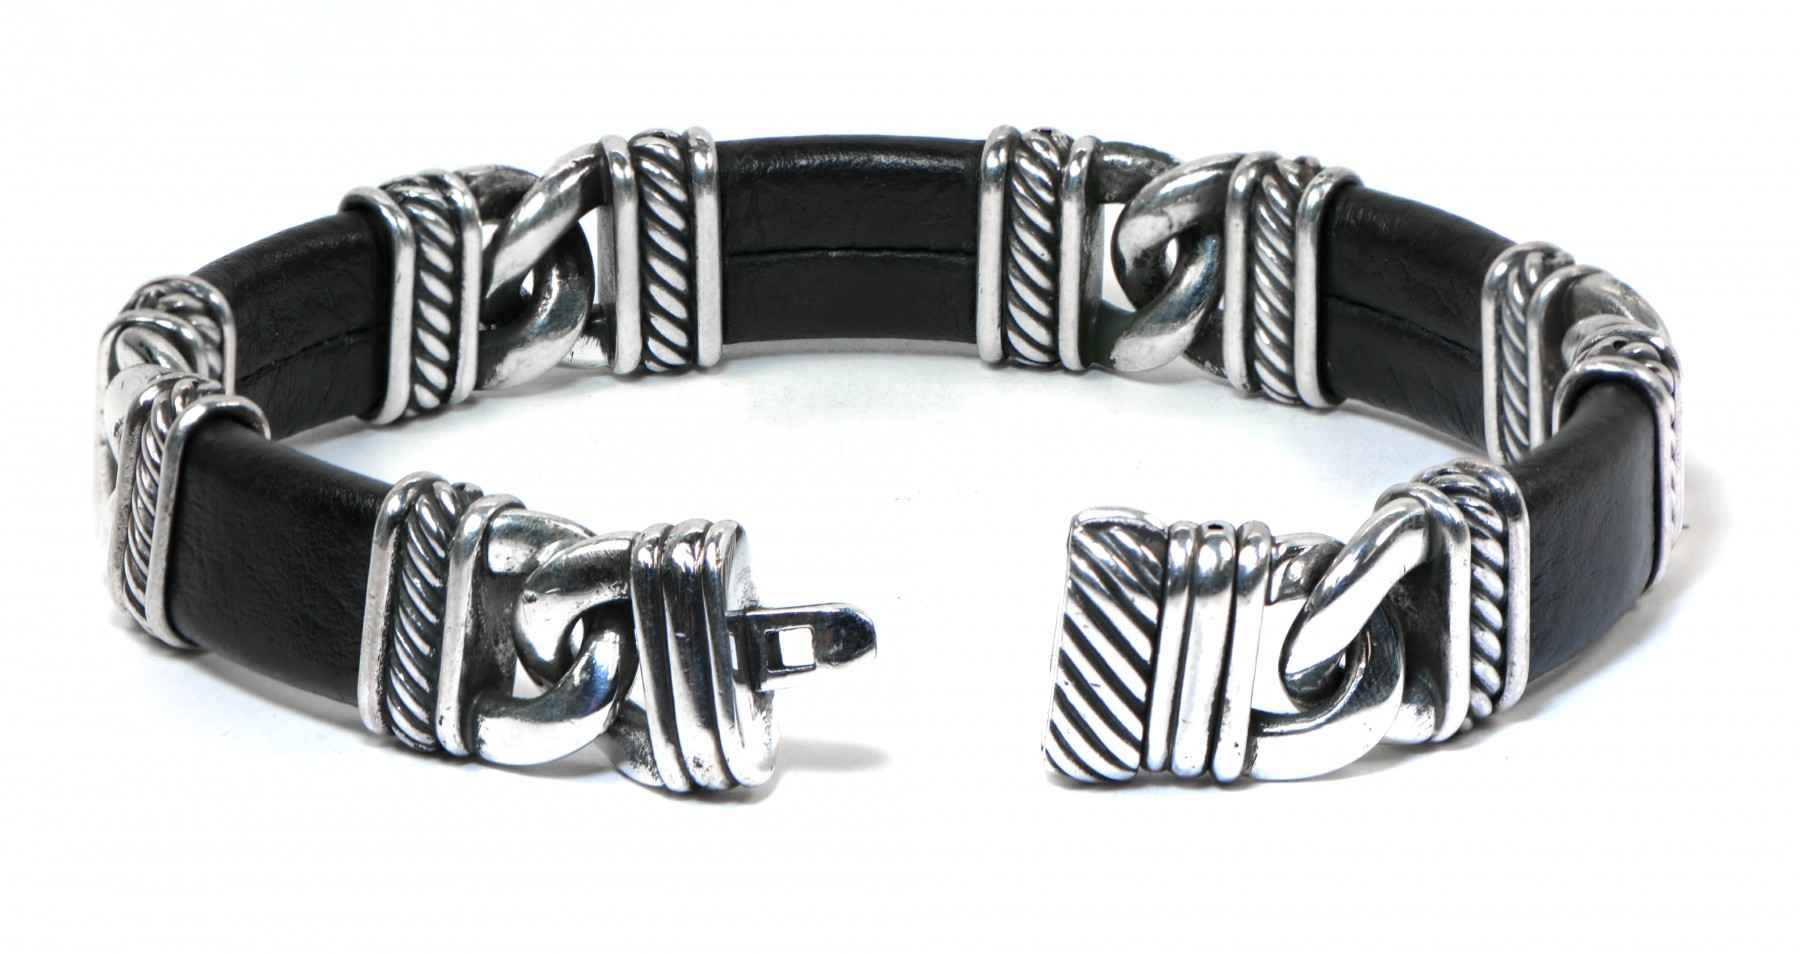 David Yurman Faceted Link Bracelet in Sterling Silver with Pavé Black Diamonds Men's Size Medium